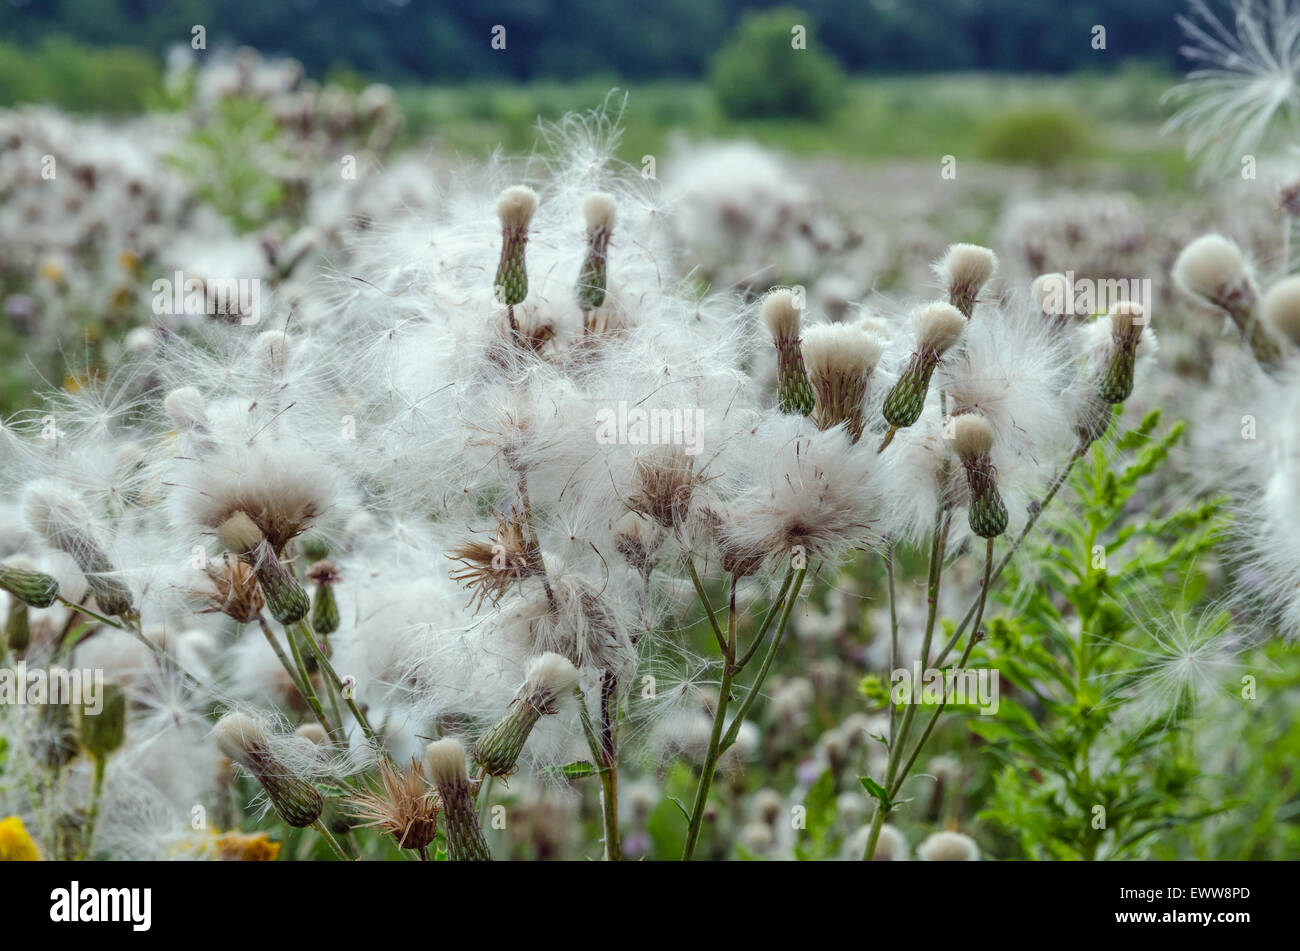 Purpul arctium lappa on green grass background Stock Photo